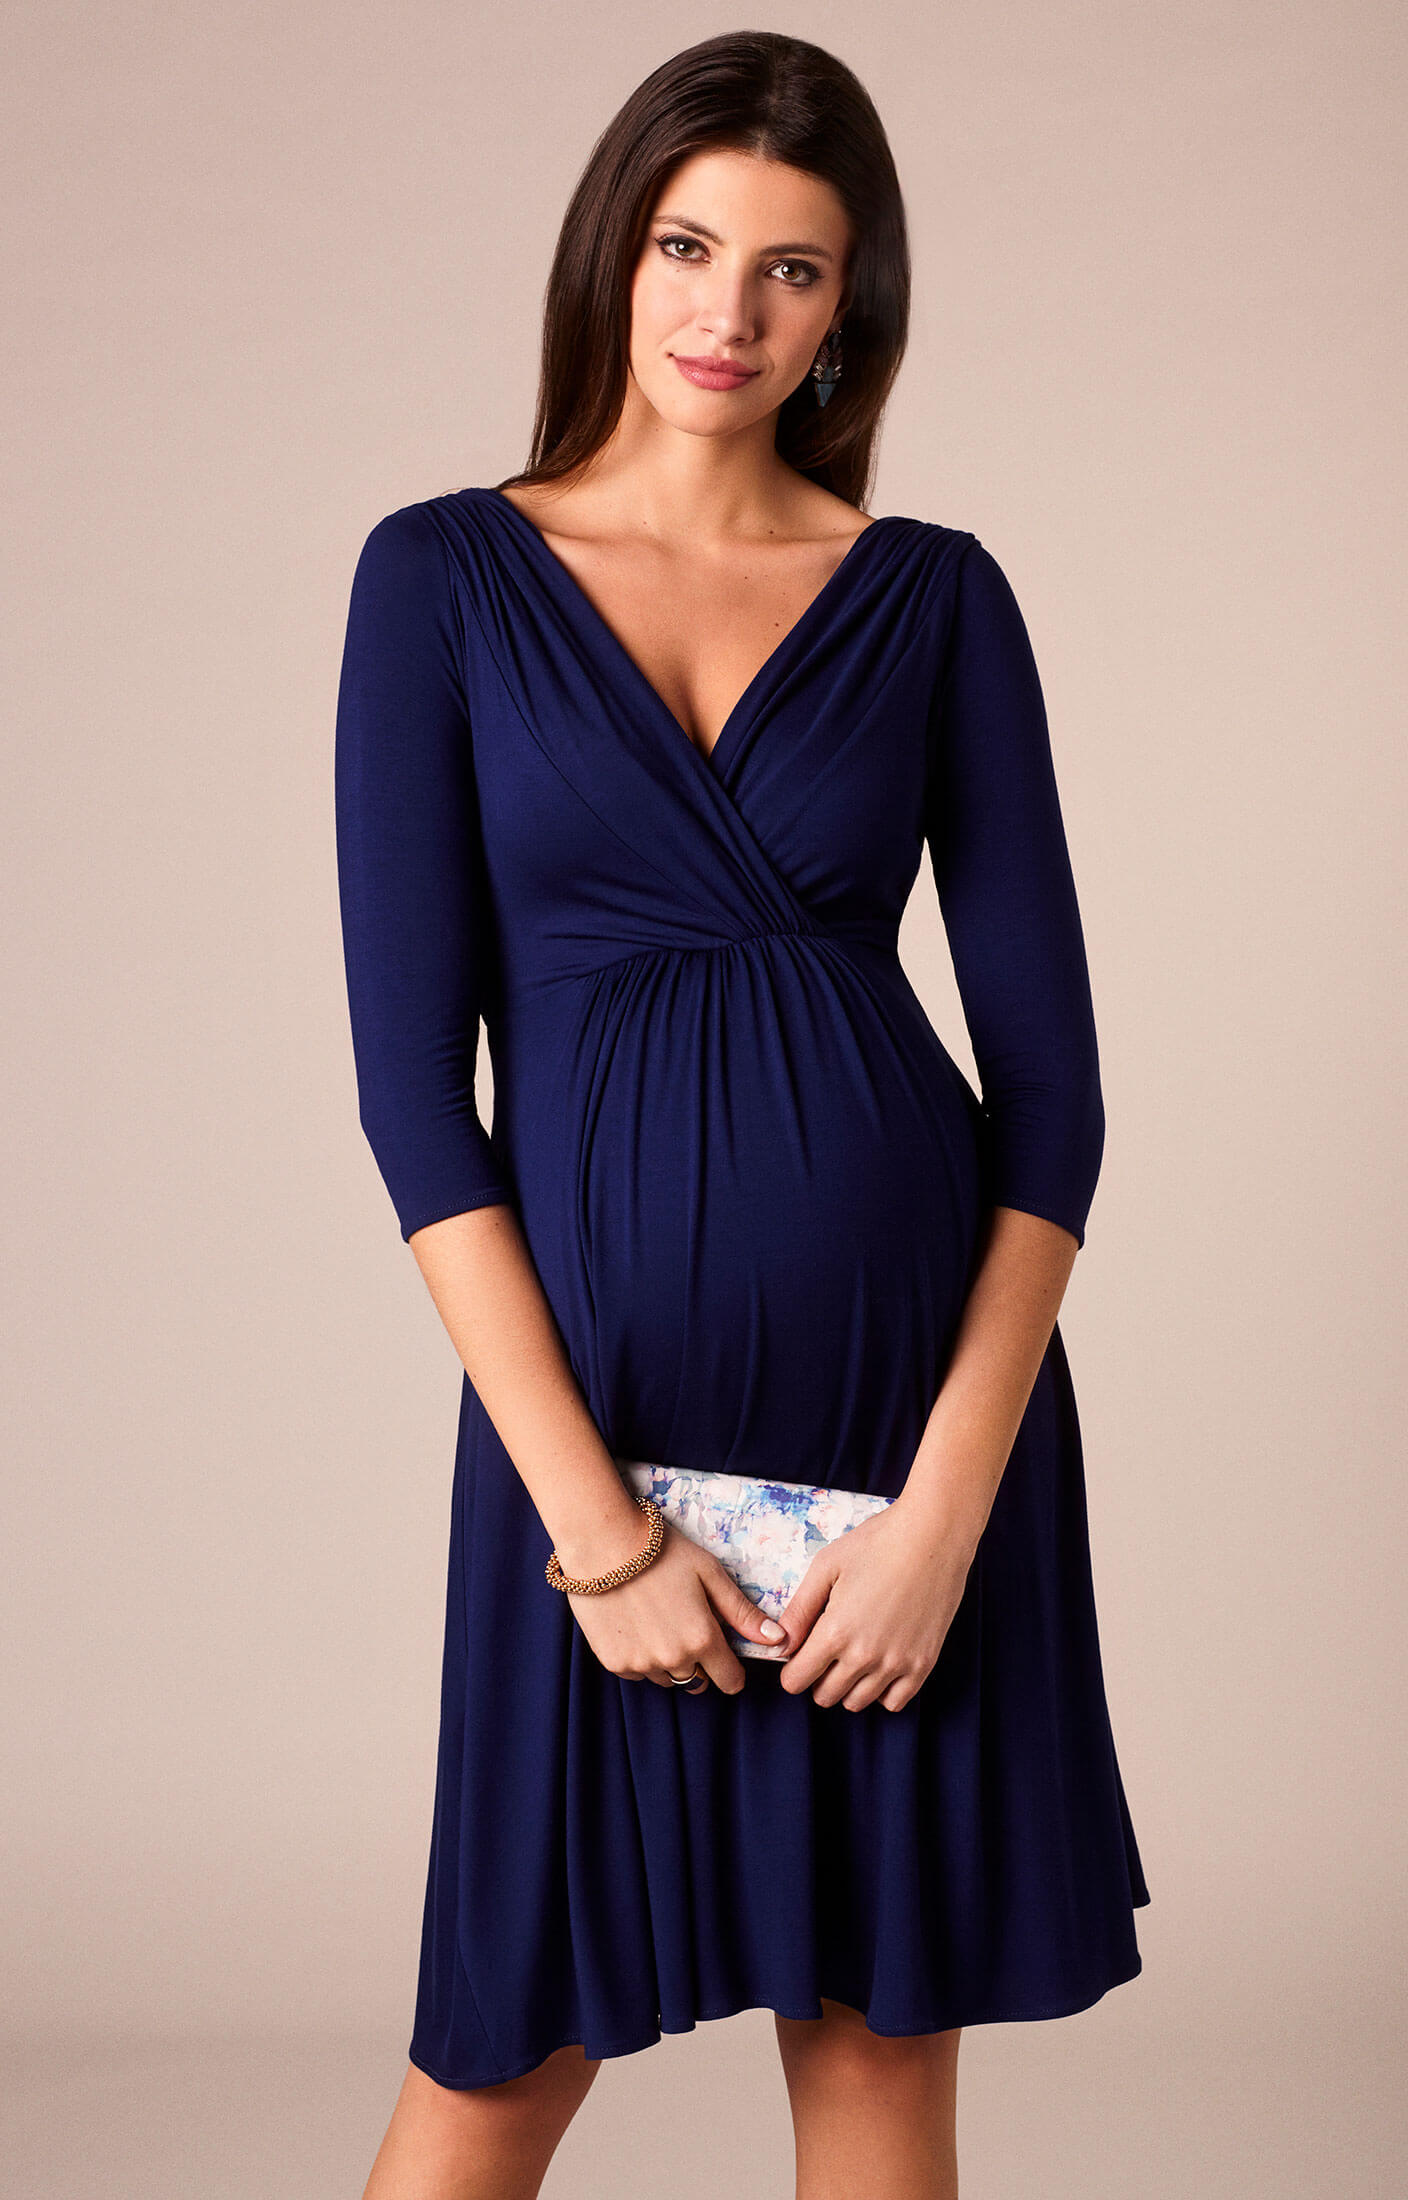 Willow Maternity Dress Eclipse Blue - Maternity Wedding Dresses ...